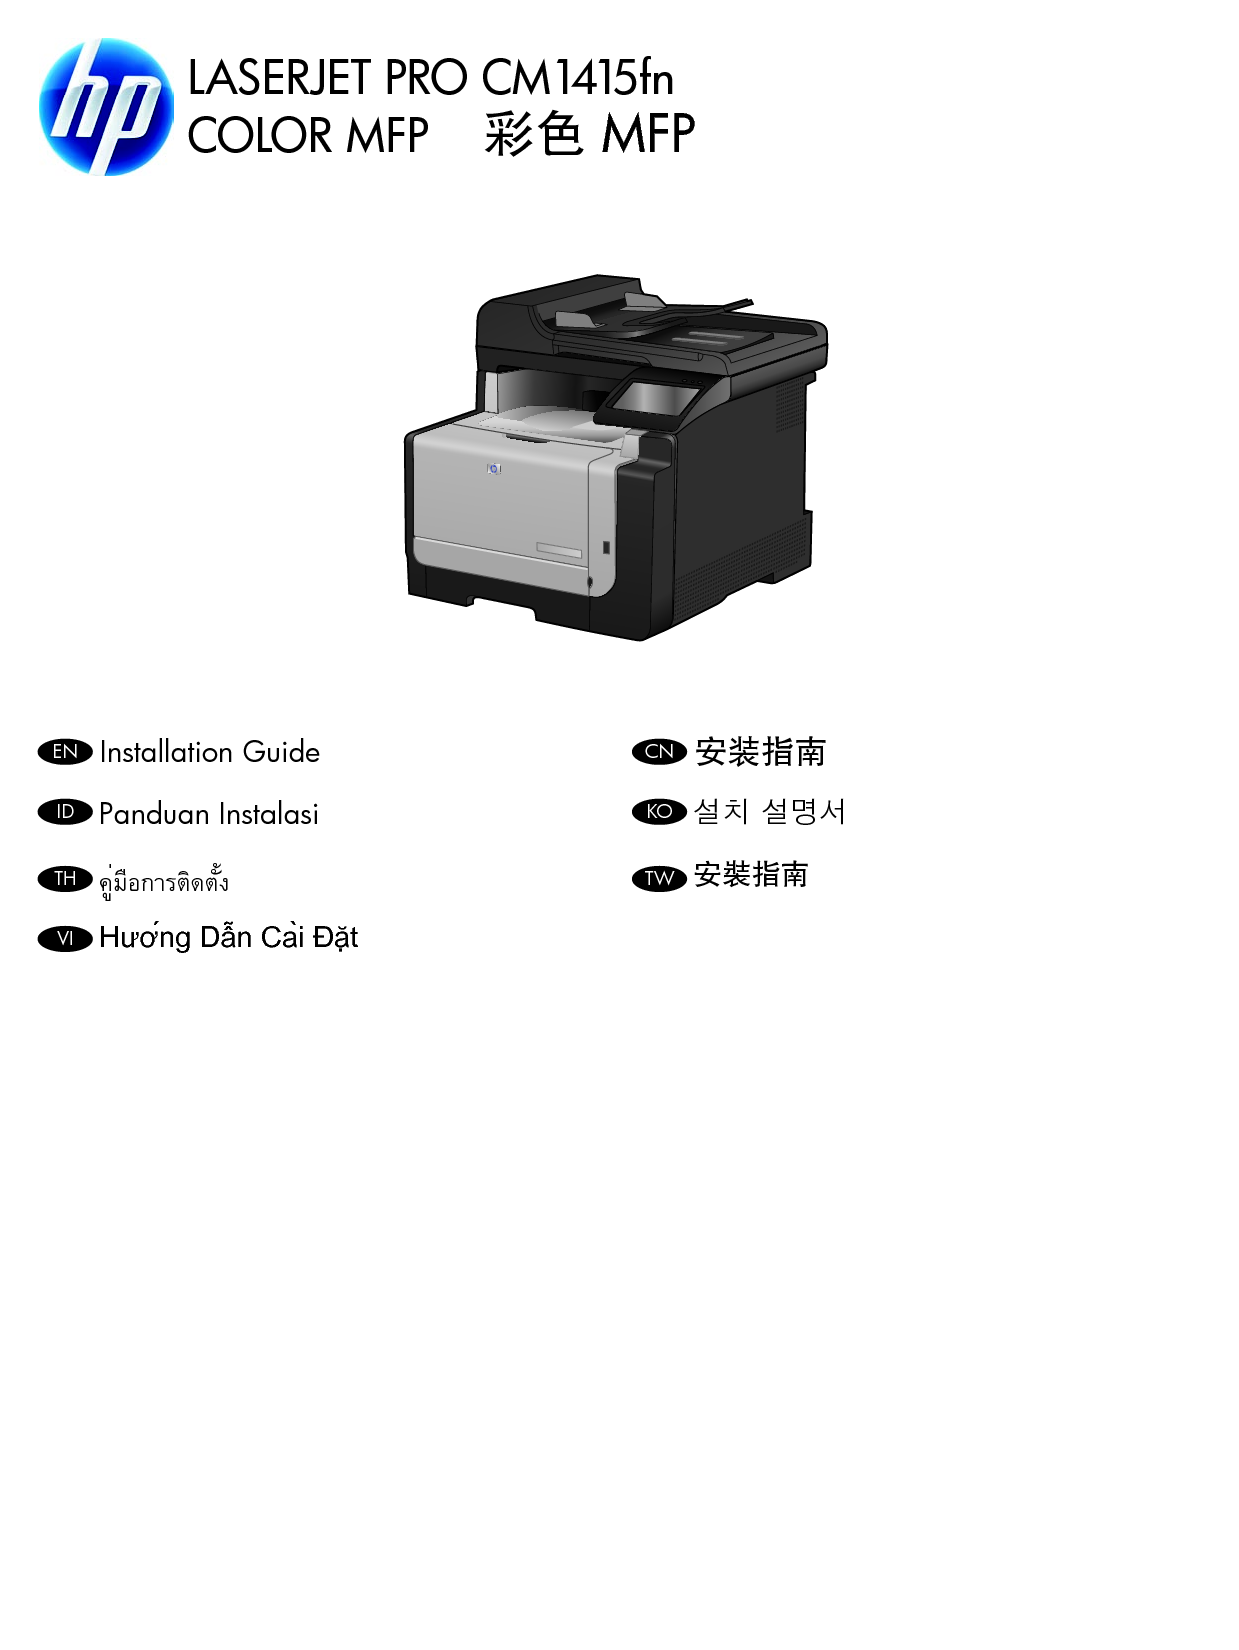 惠普 HP LaserJet Pro CM1415fn Color MFP 安装指南 封面